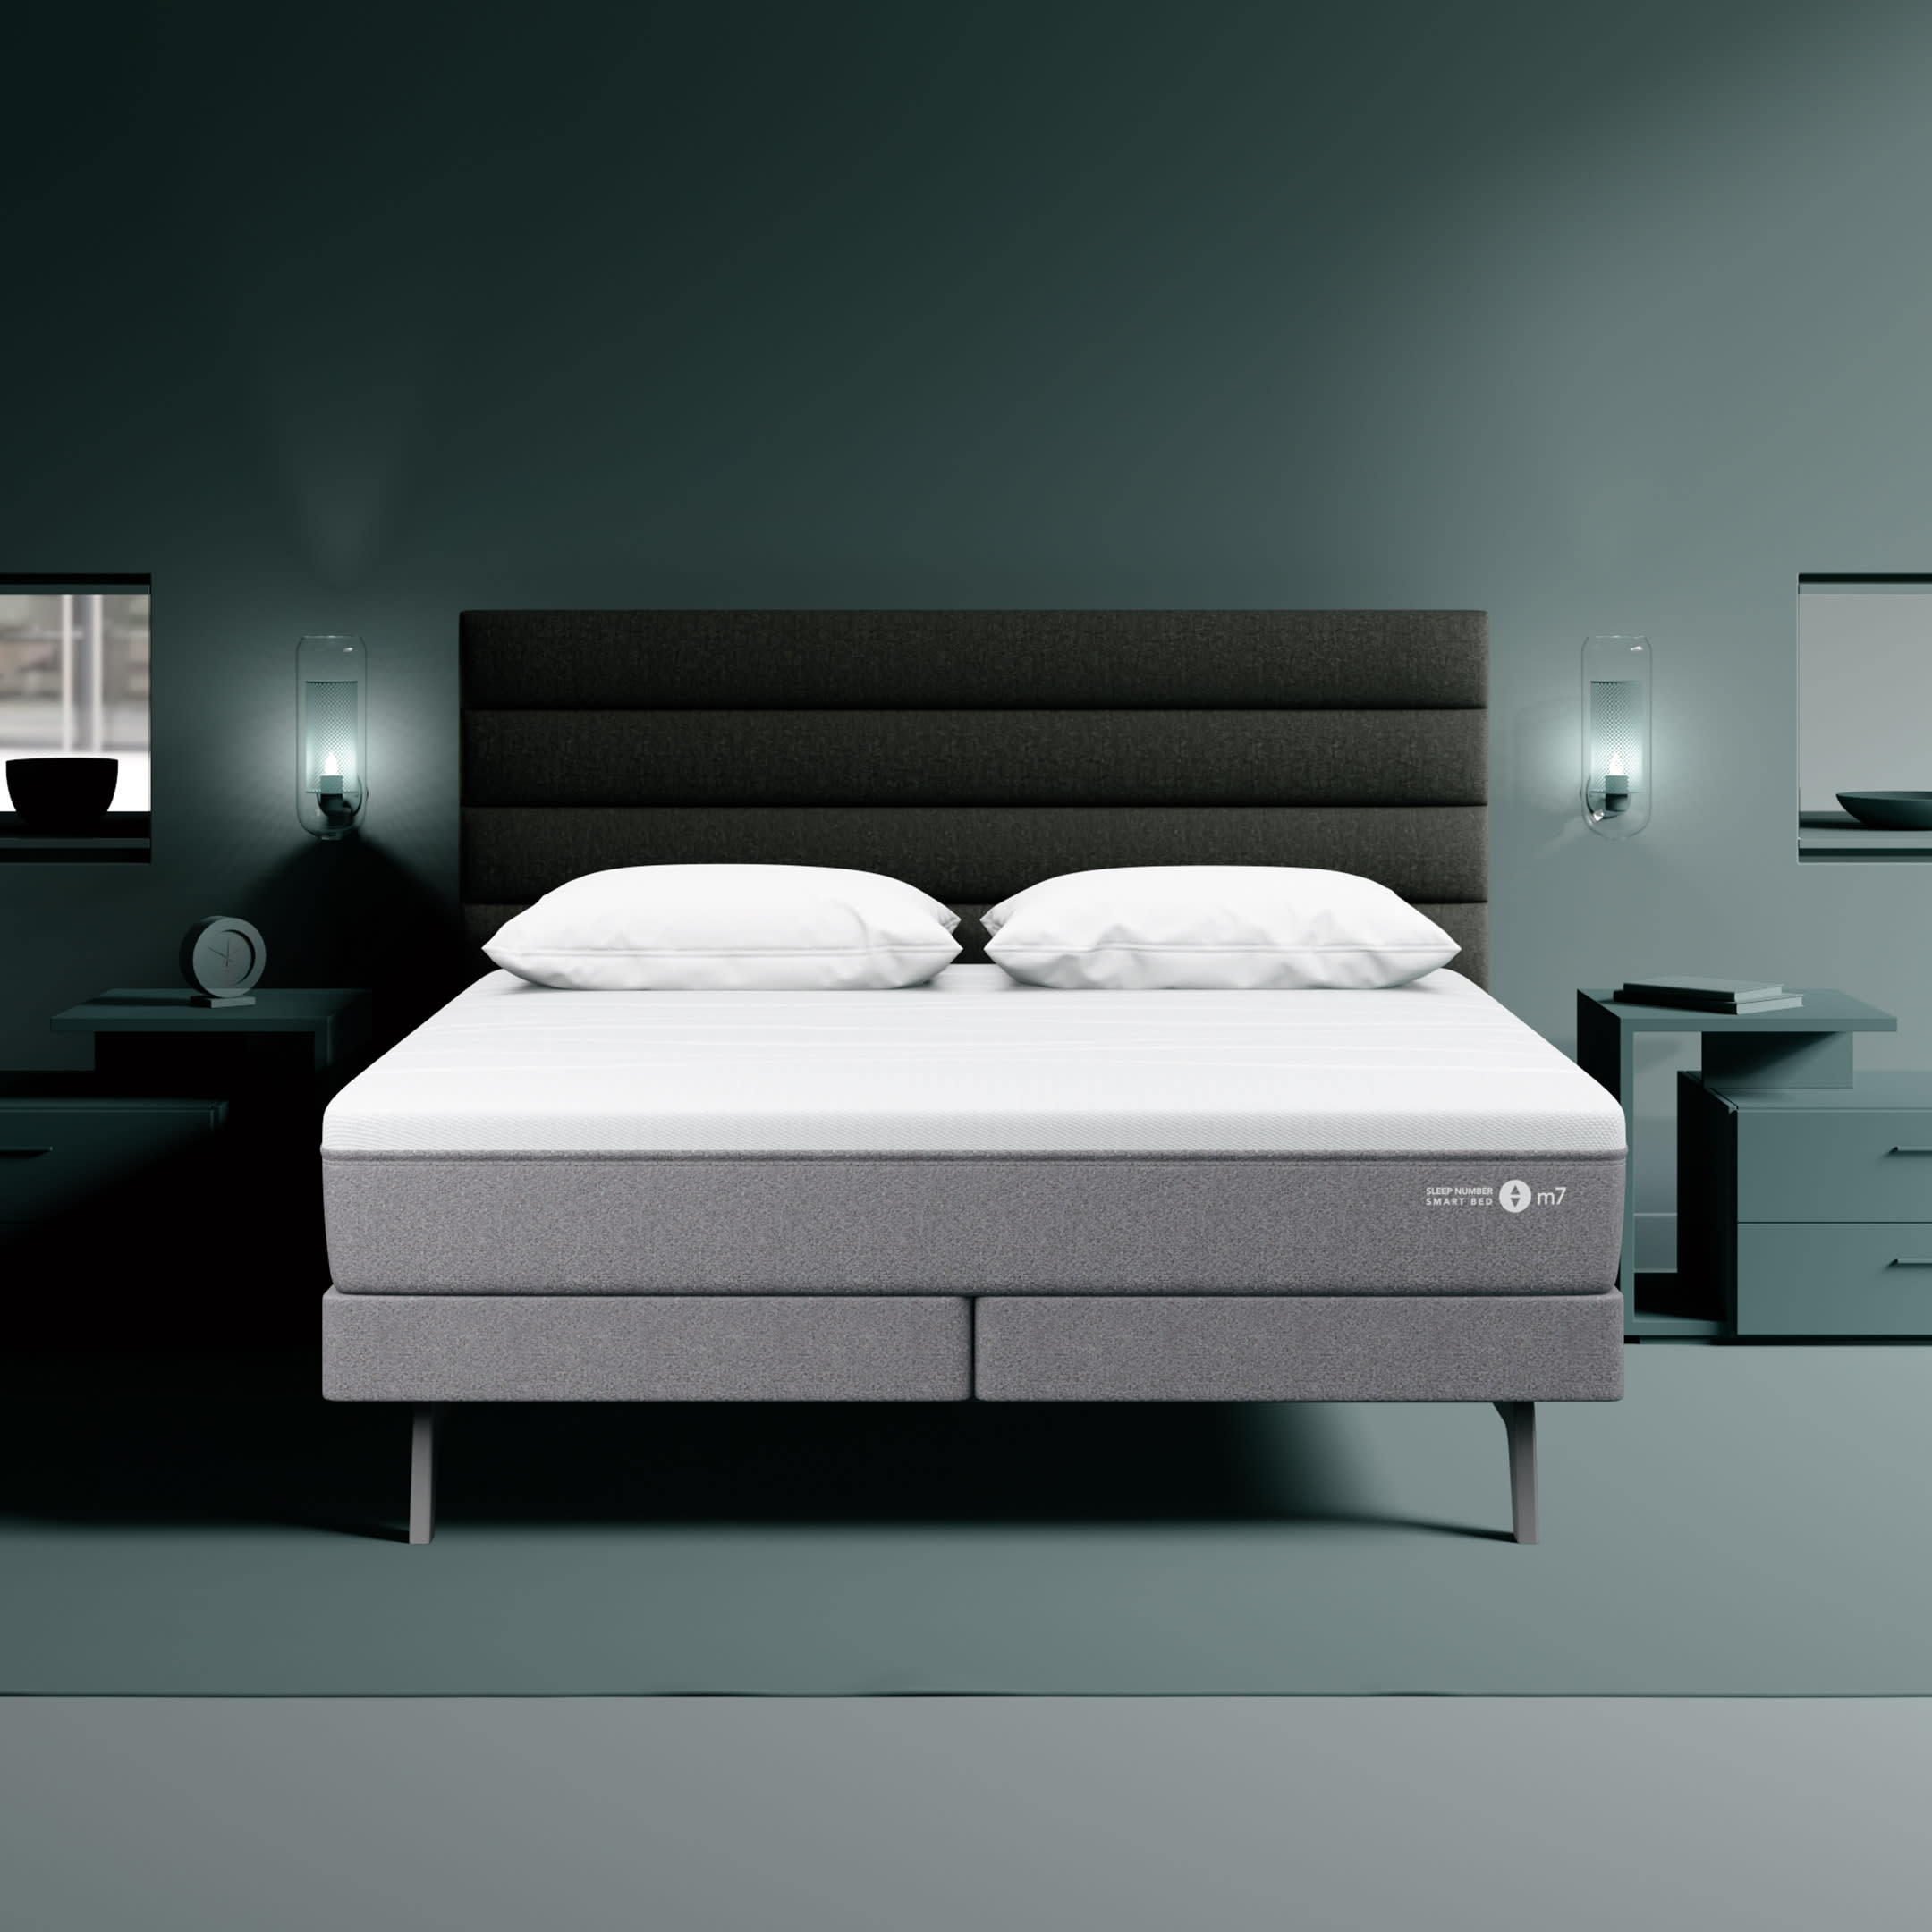 m7 Smart Bed - Sleep Number